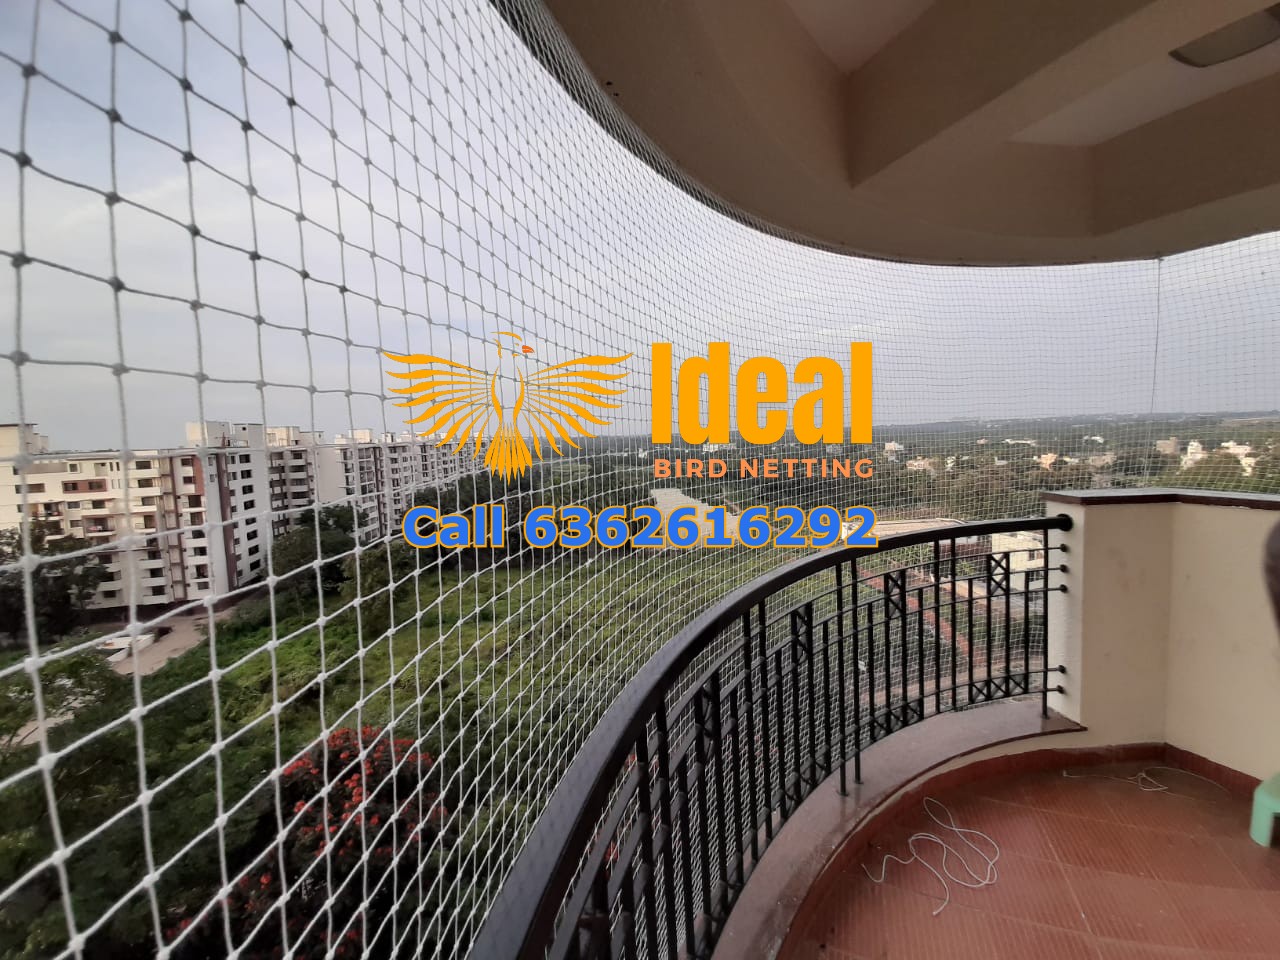 Balcony Safety Nets NearMe in Bangalore, Mysuru, Hyderabad, Chennai, Pune, Mumbai | To Install 6362616292